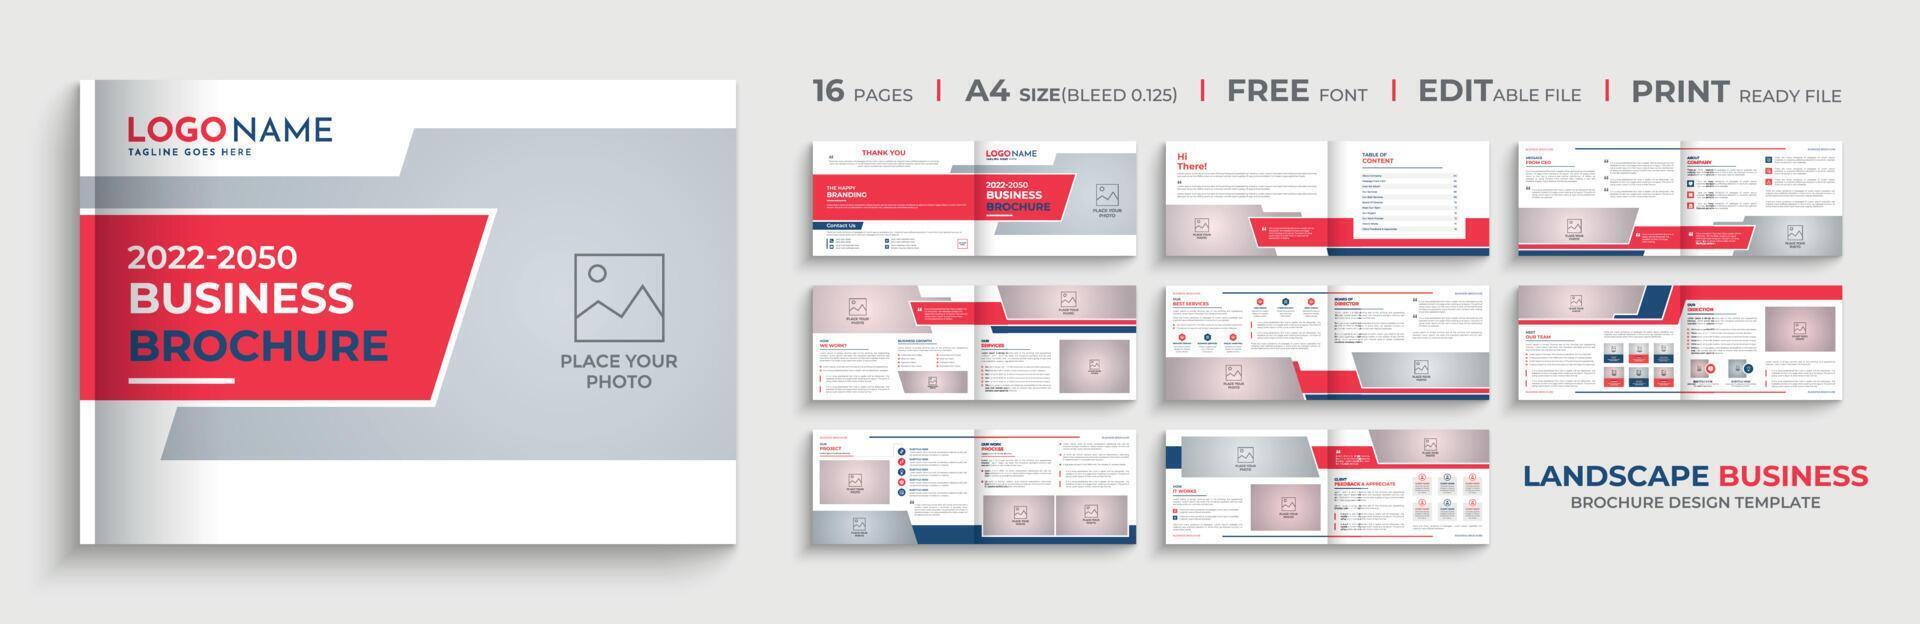 16 Page creative landscape business company profile brochure template design vector